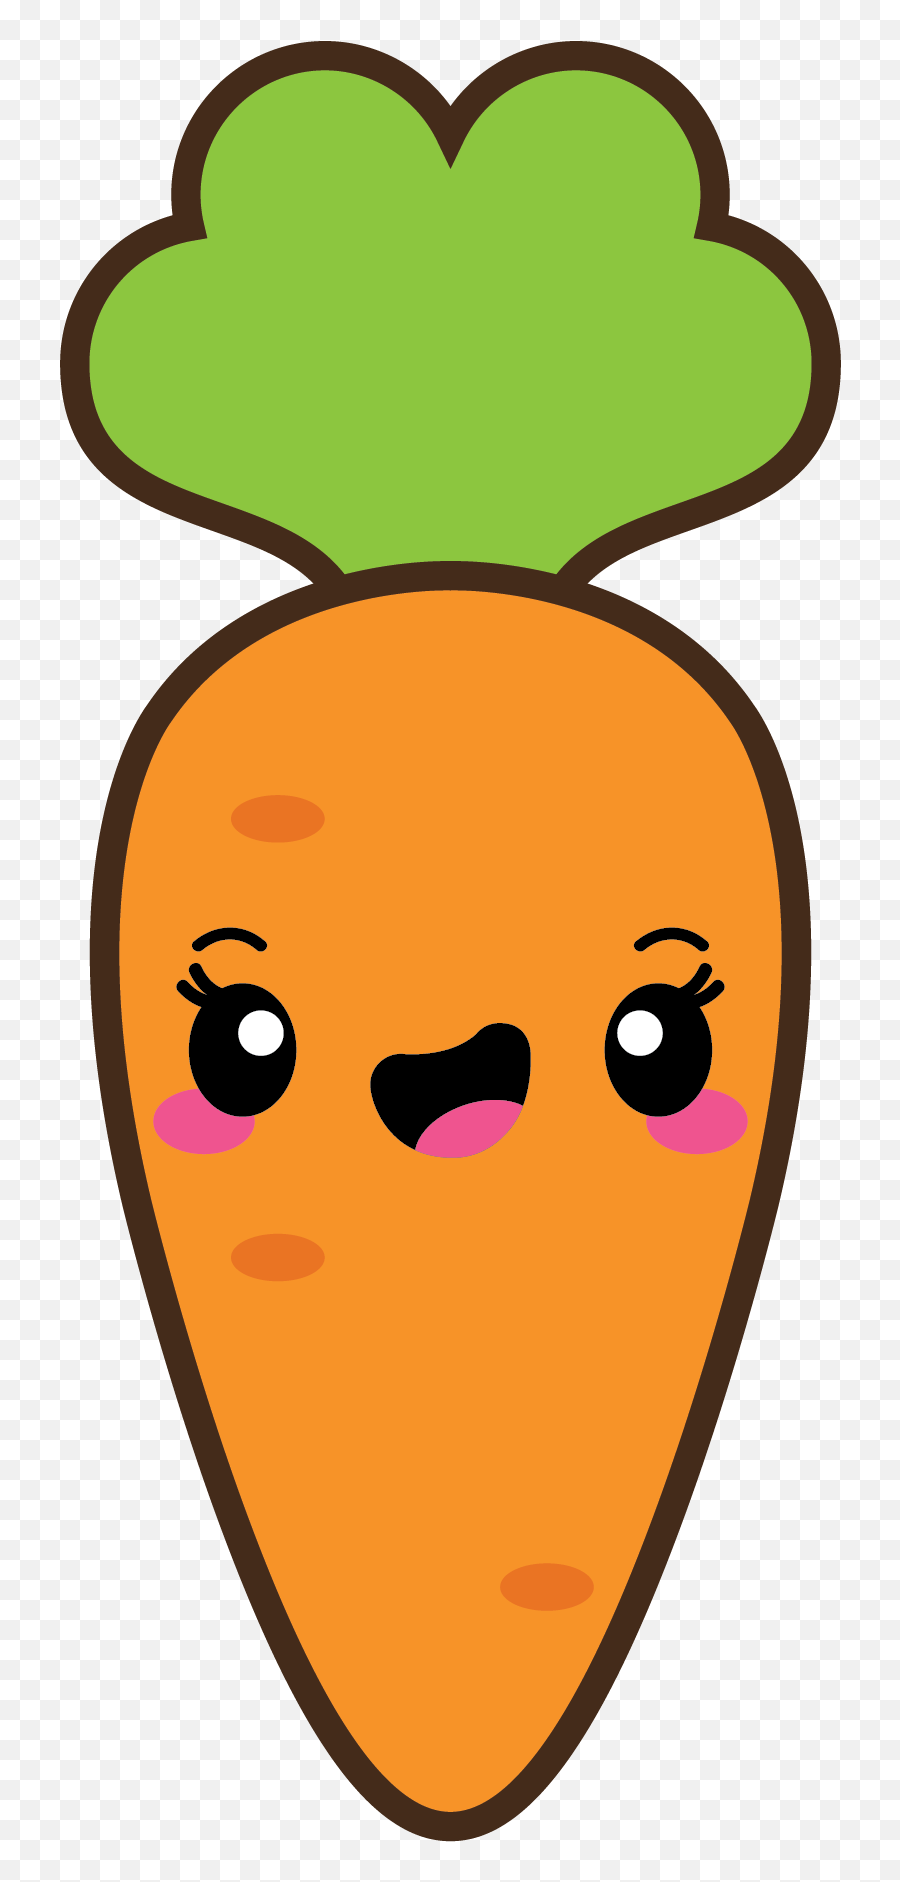 Carrot - Cucumber Eggplant Pea1 Clipart Full Size Kawaii Cute Carrot Emoji,Cucumber Emoji